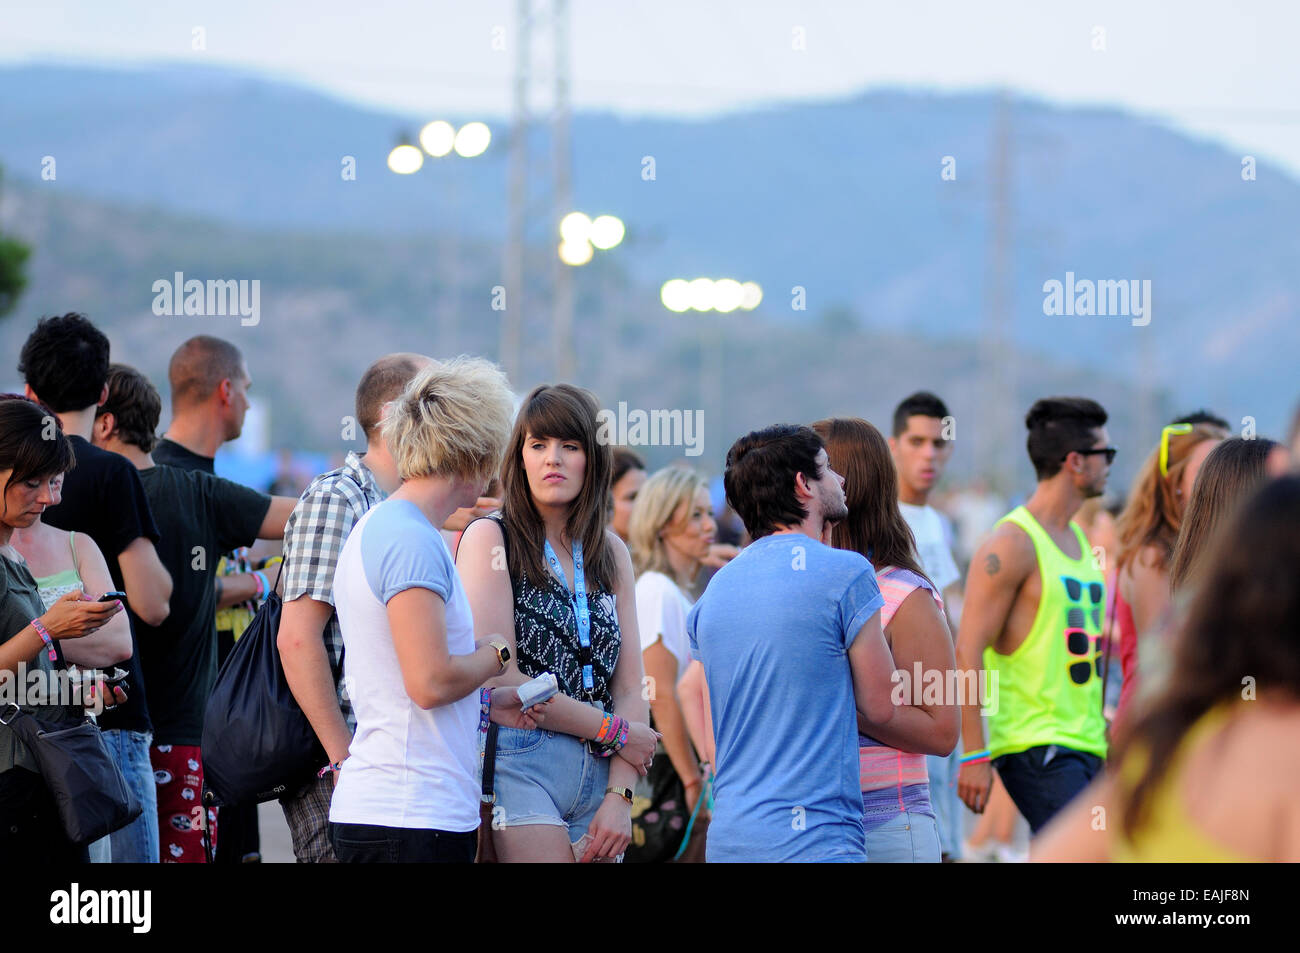 BENICASIM, SPAIN - JULY 18: People (fans) at FIB (Festival Internacional de Benicassim) 2013 Festival. Stock Photo